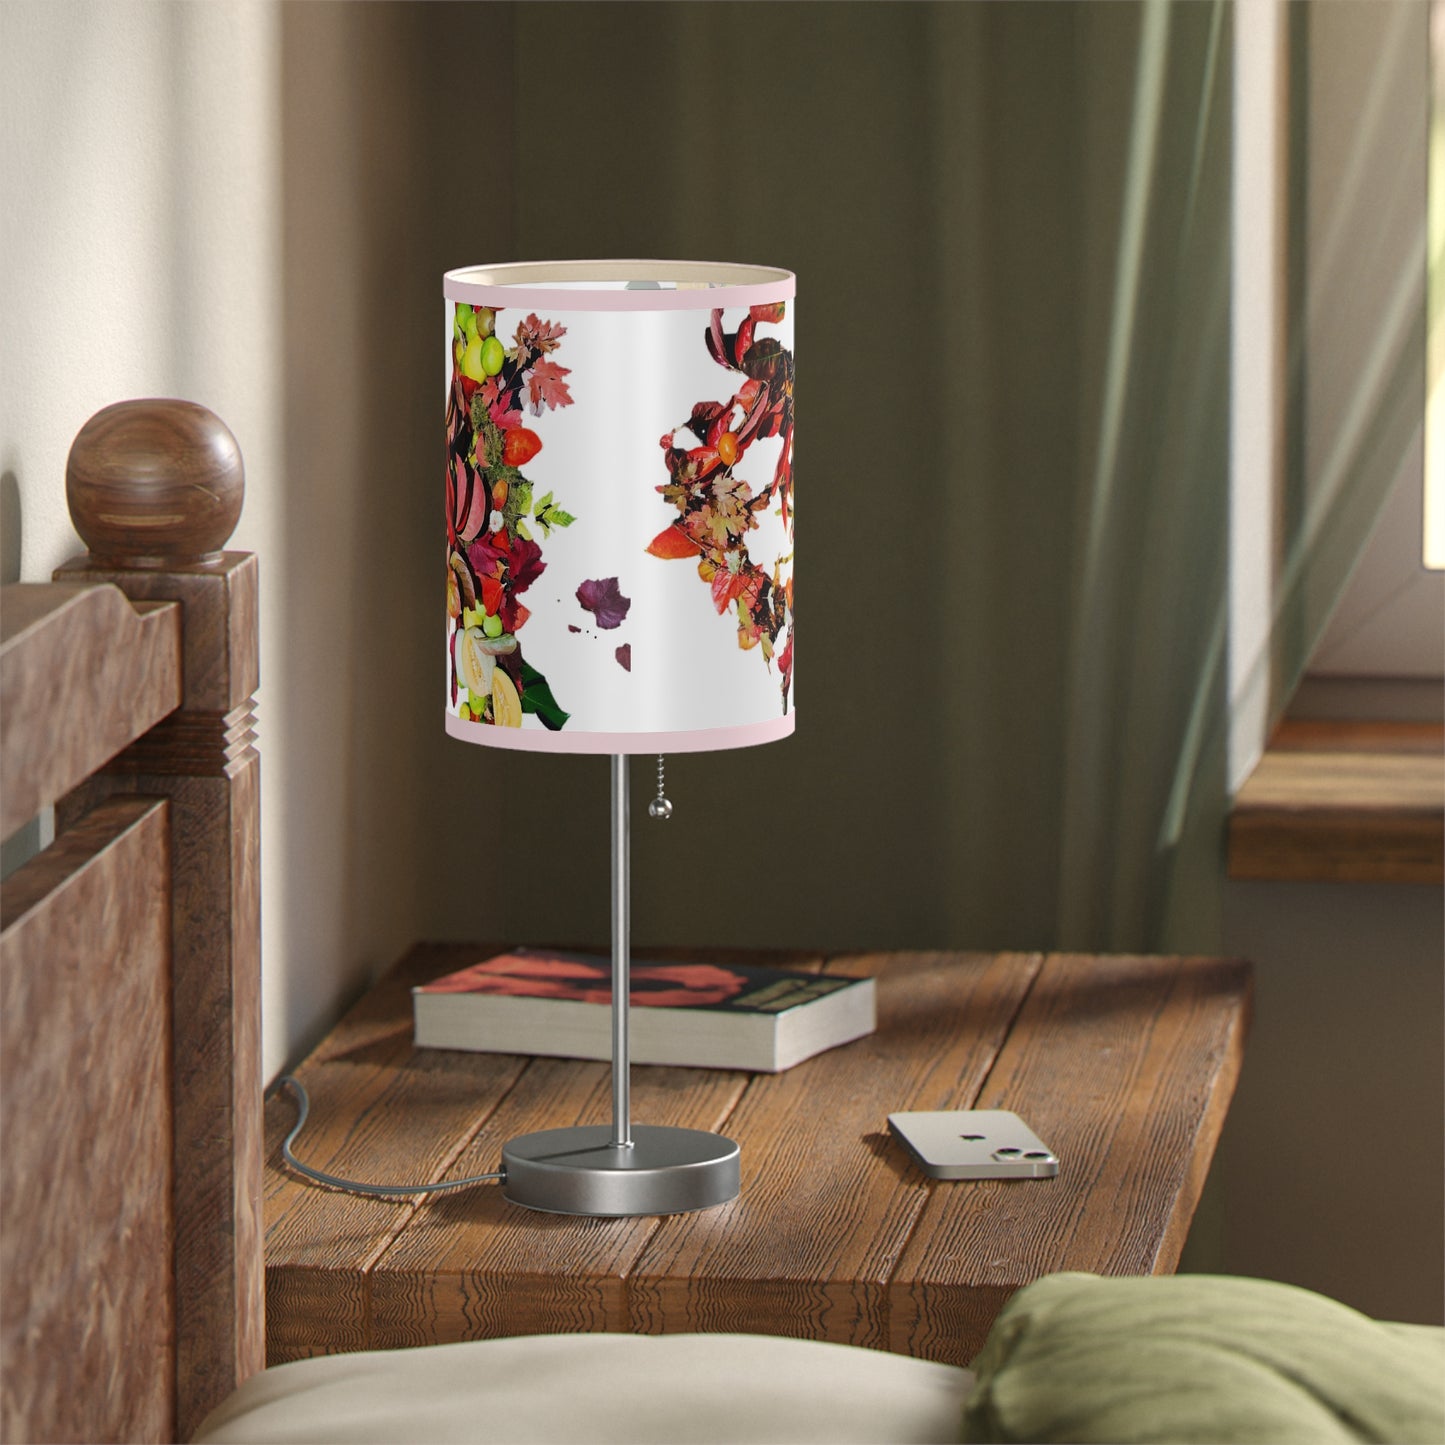 Lamp on a Stand, US|CA plug shons & gauncho